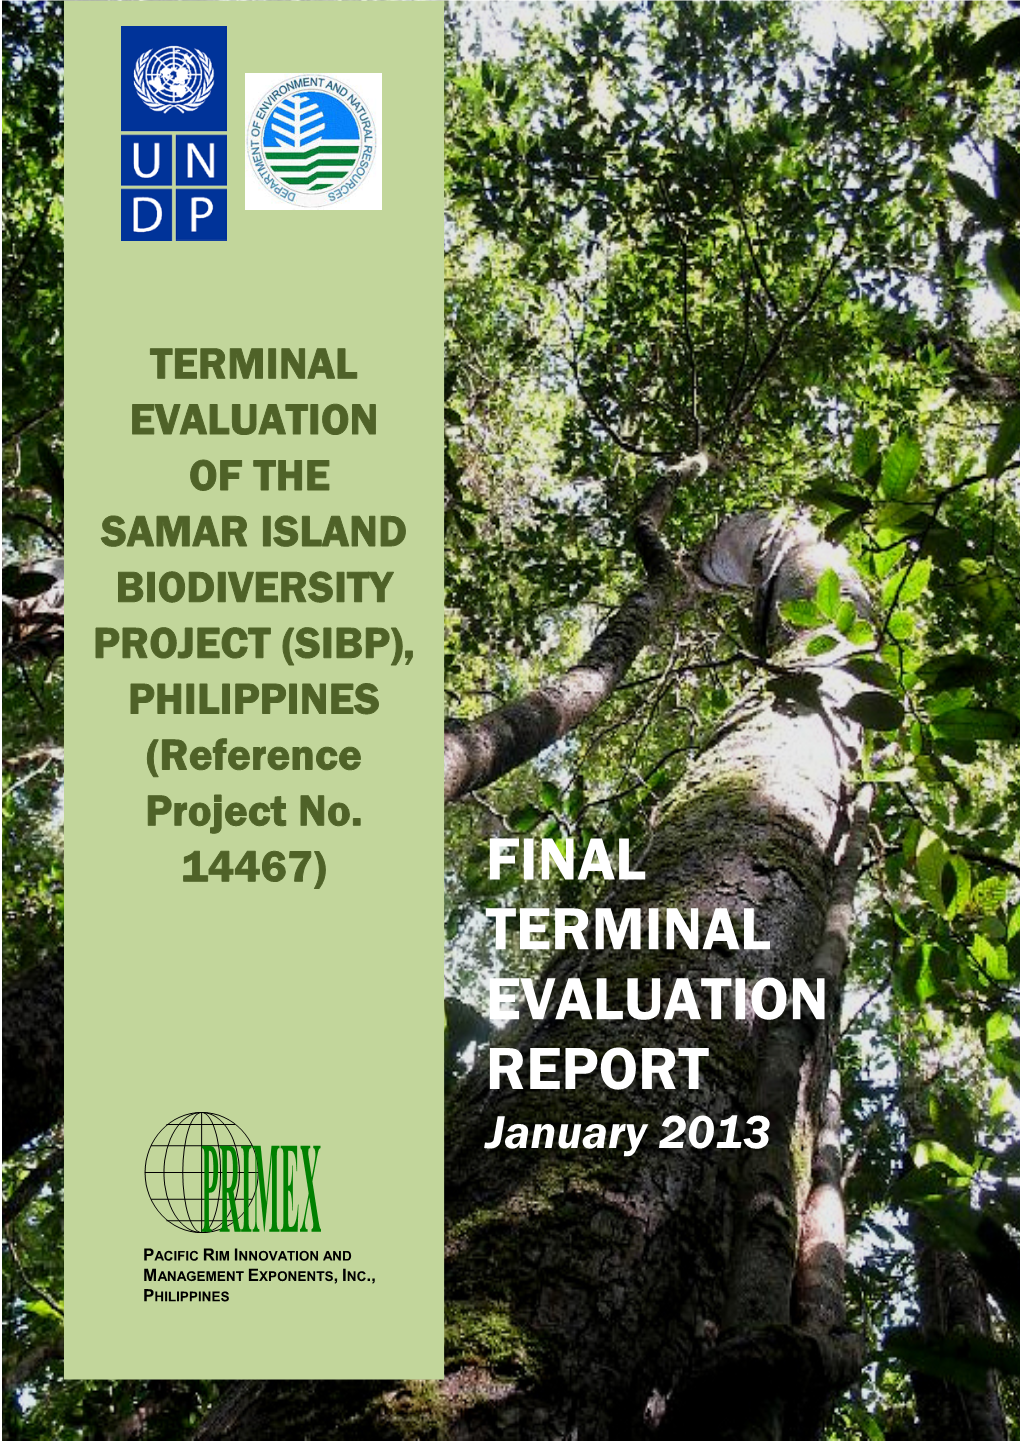 FINAL TERMINAL EVALUATION REPORT January 2013